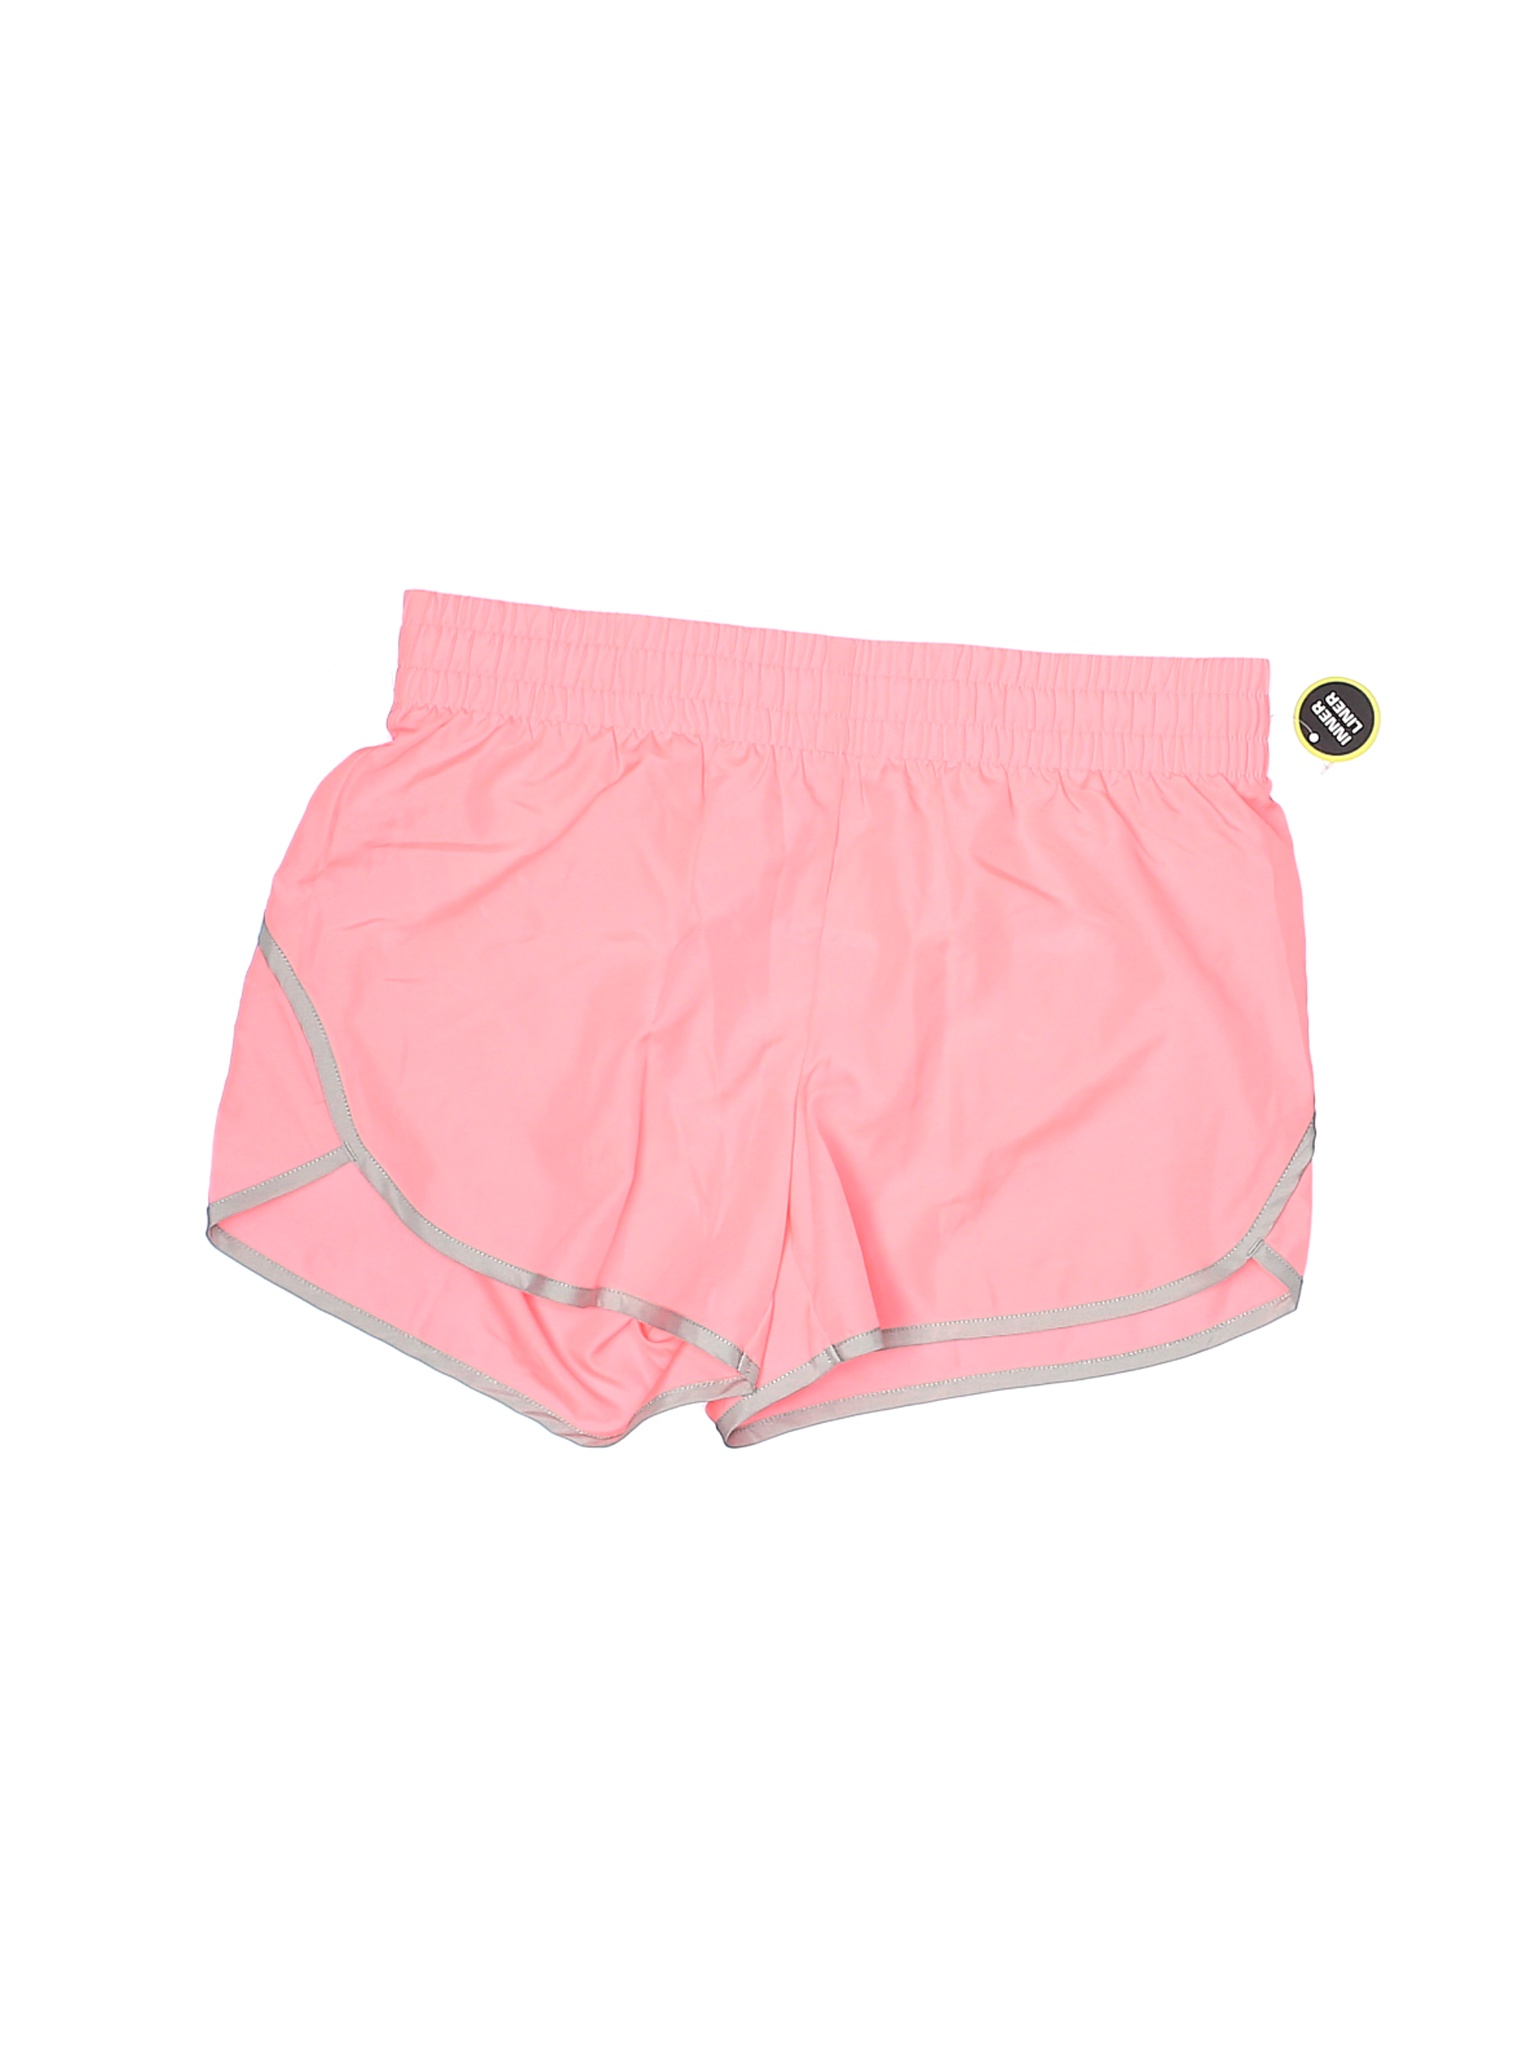 Athletic Works Women Pink Athletic Shorts S | eBay